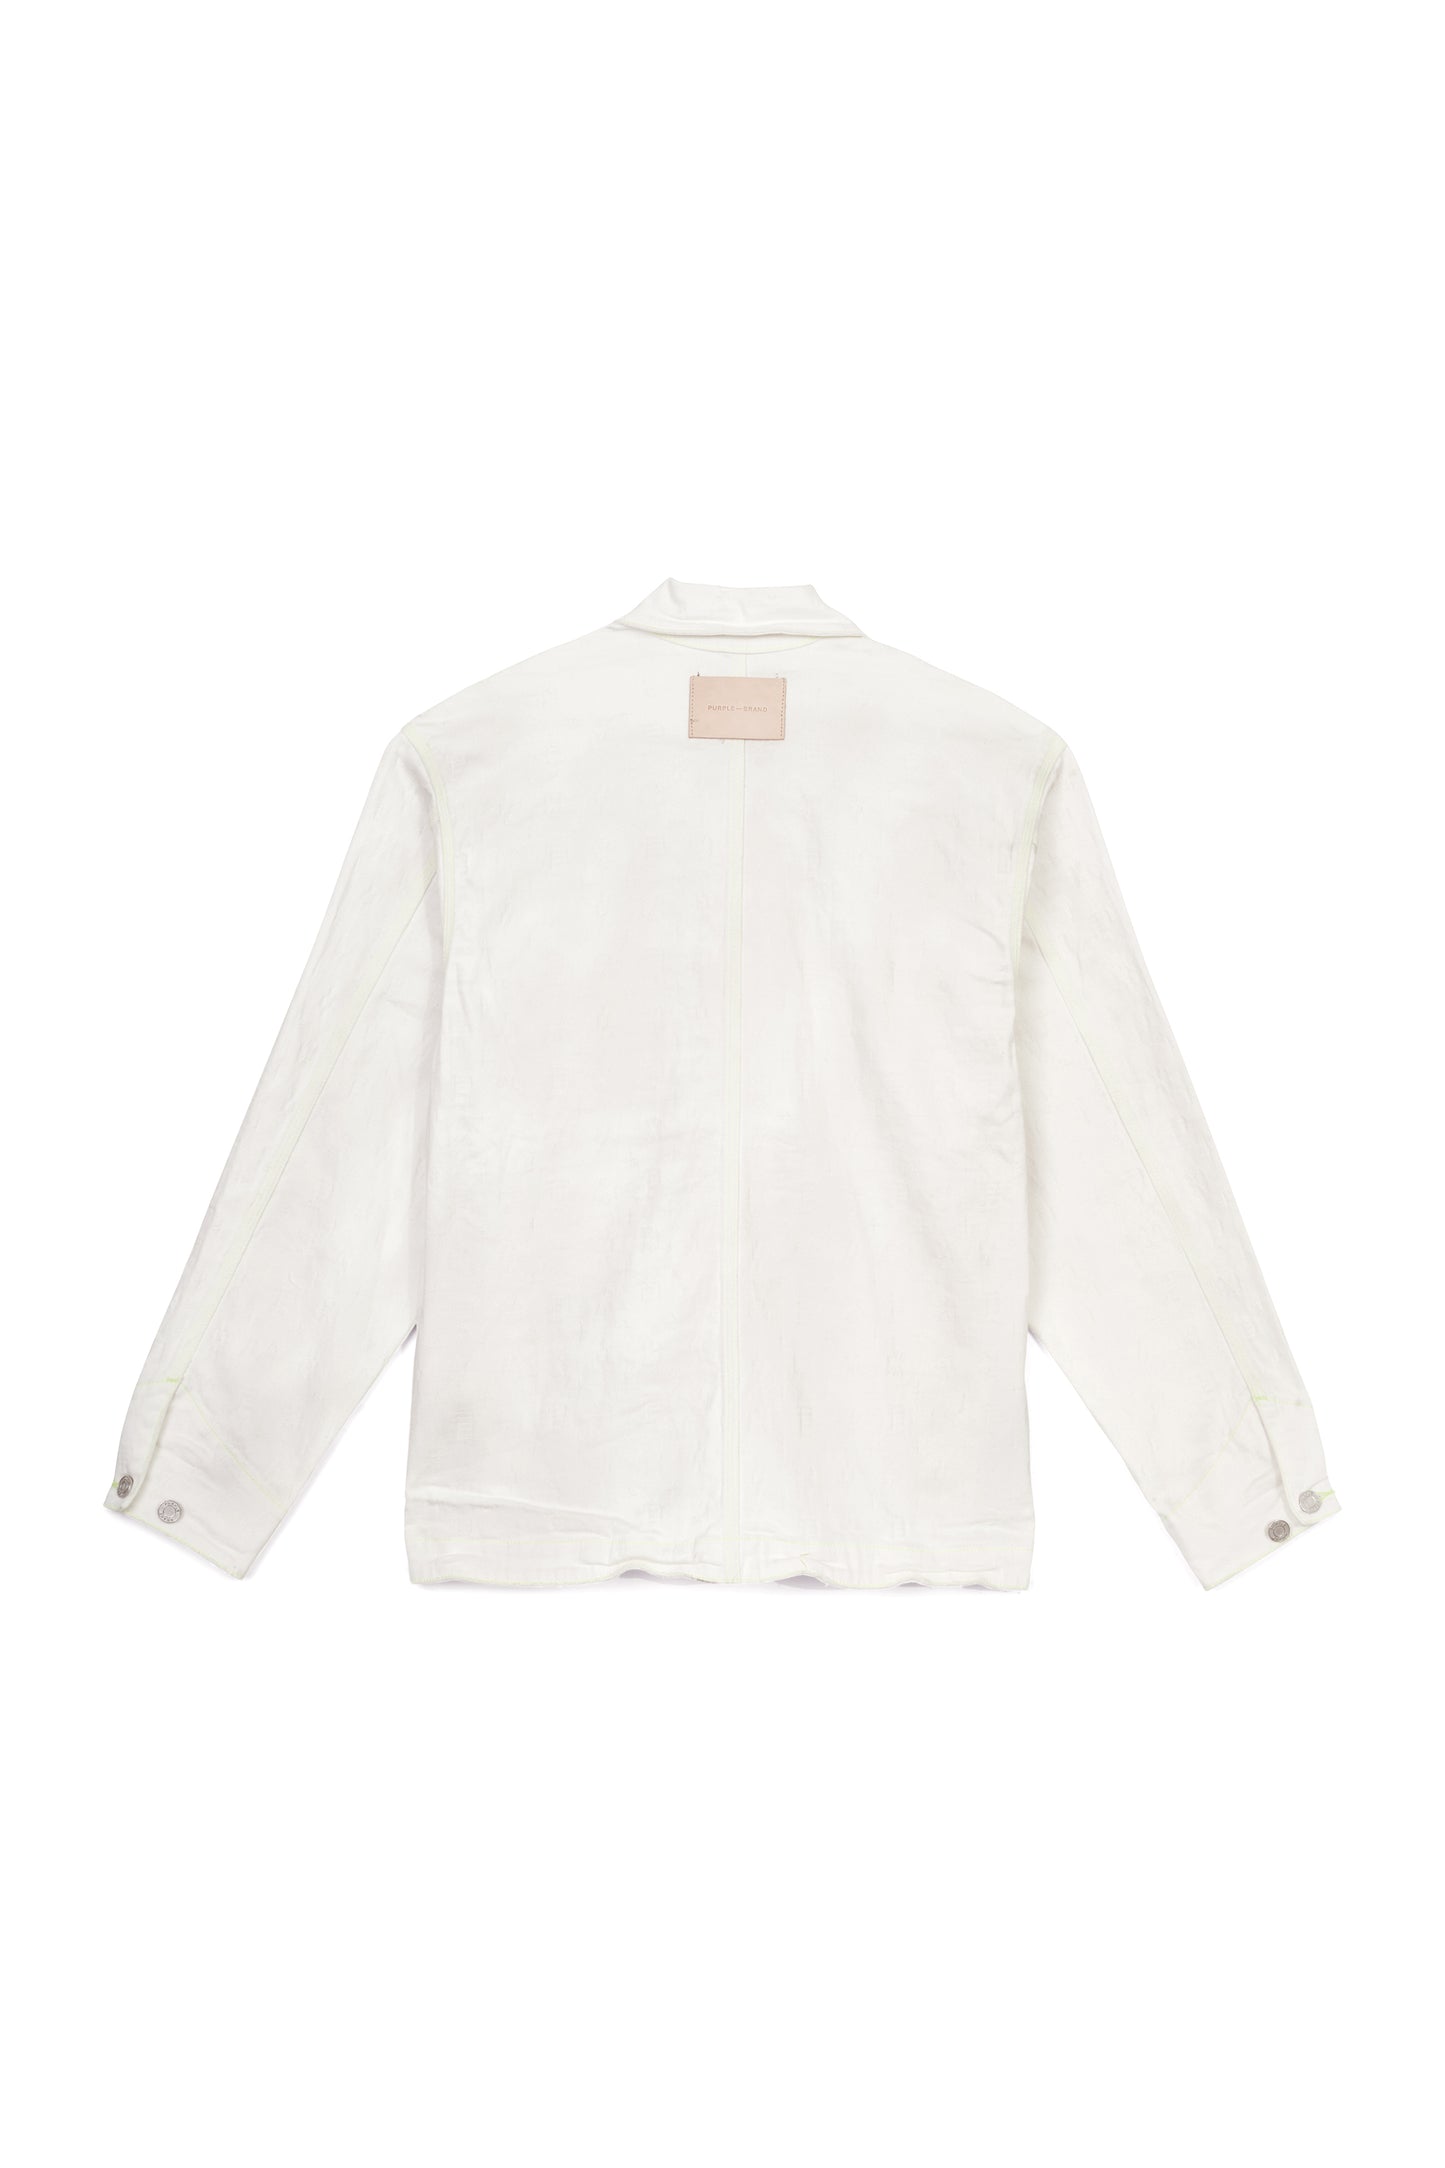 PURPLE BRAND - Men's Chore Jacket - Style No. P031 - White Jacquard - Back